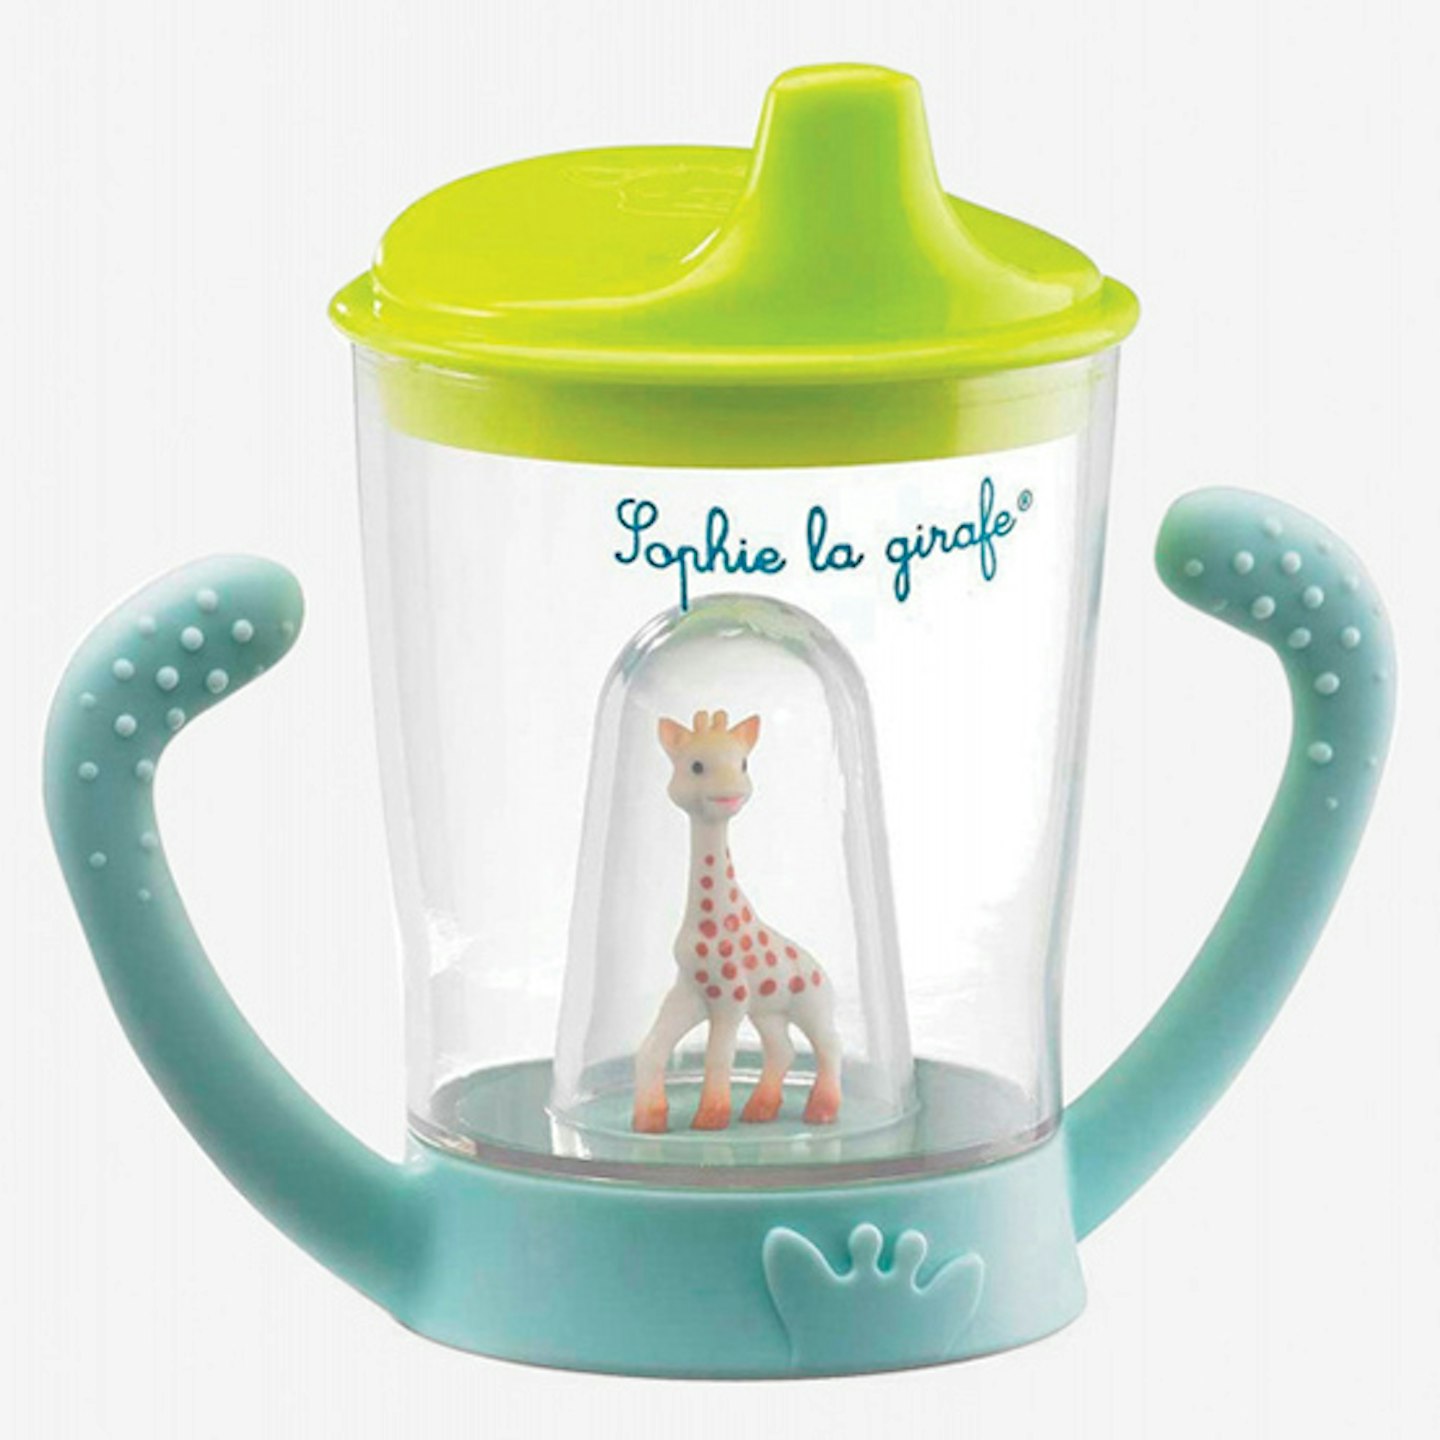 Sophie la girafe non-spill cup